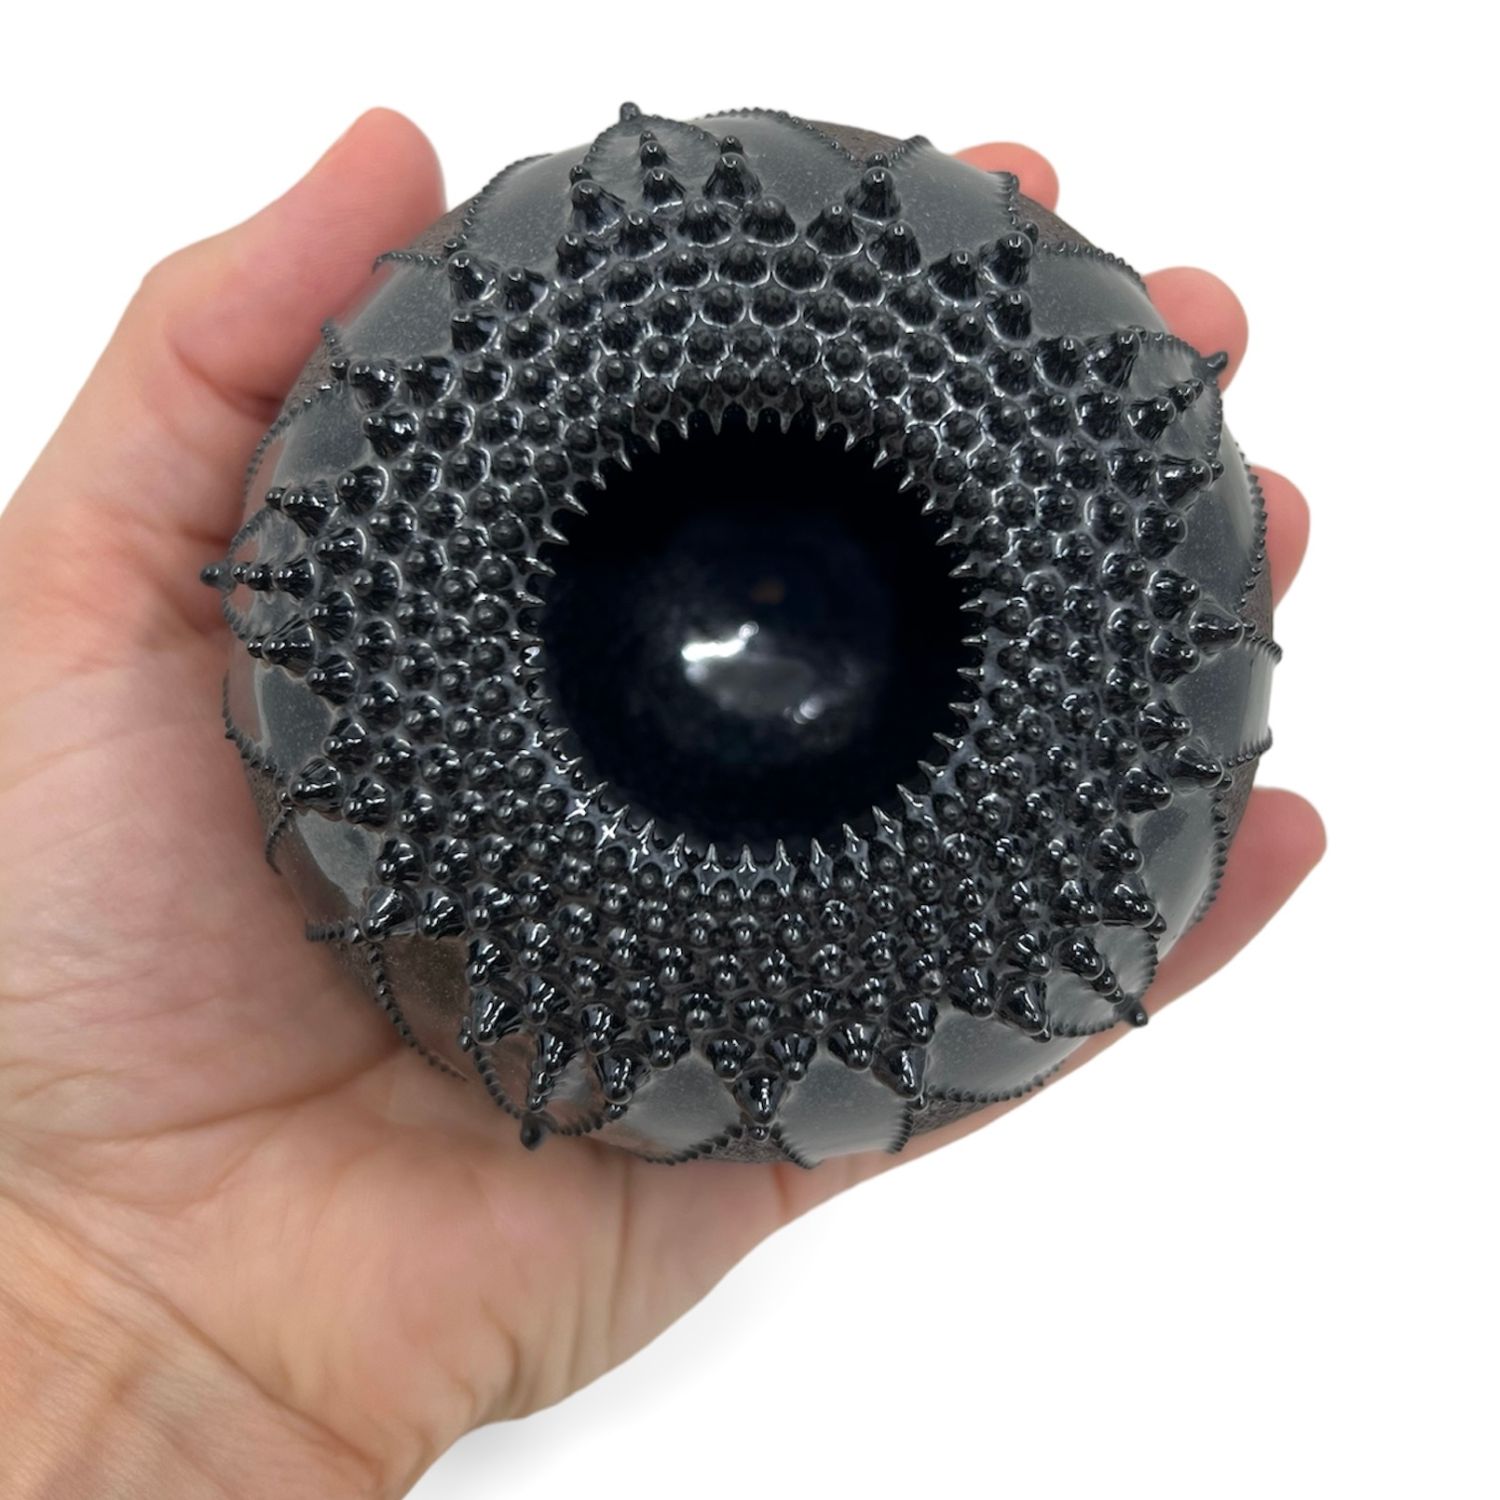 Zara Gardner: Black Urchin Sculpture Product Image 2 of 2